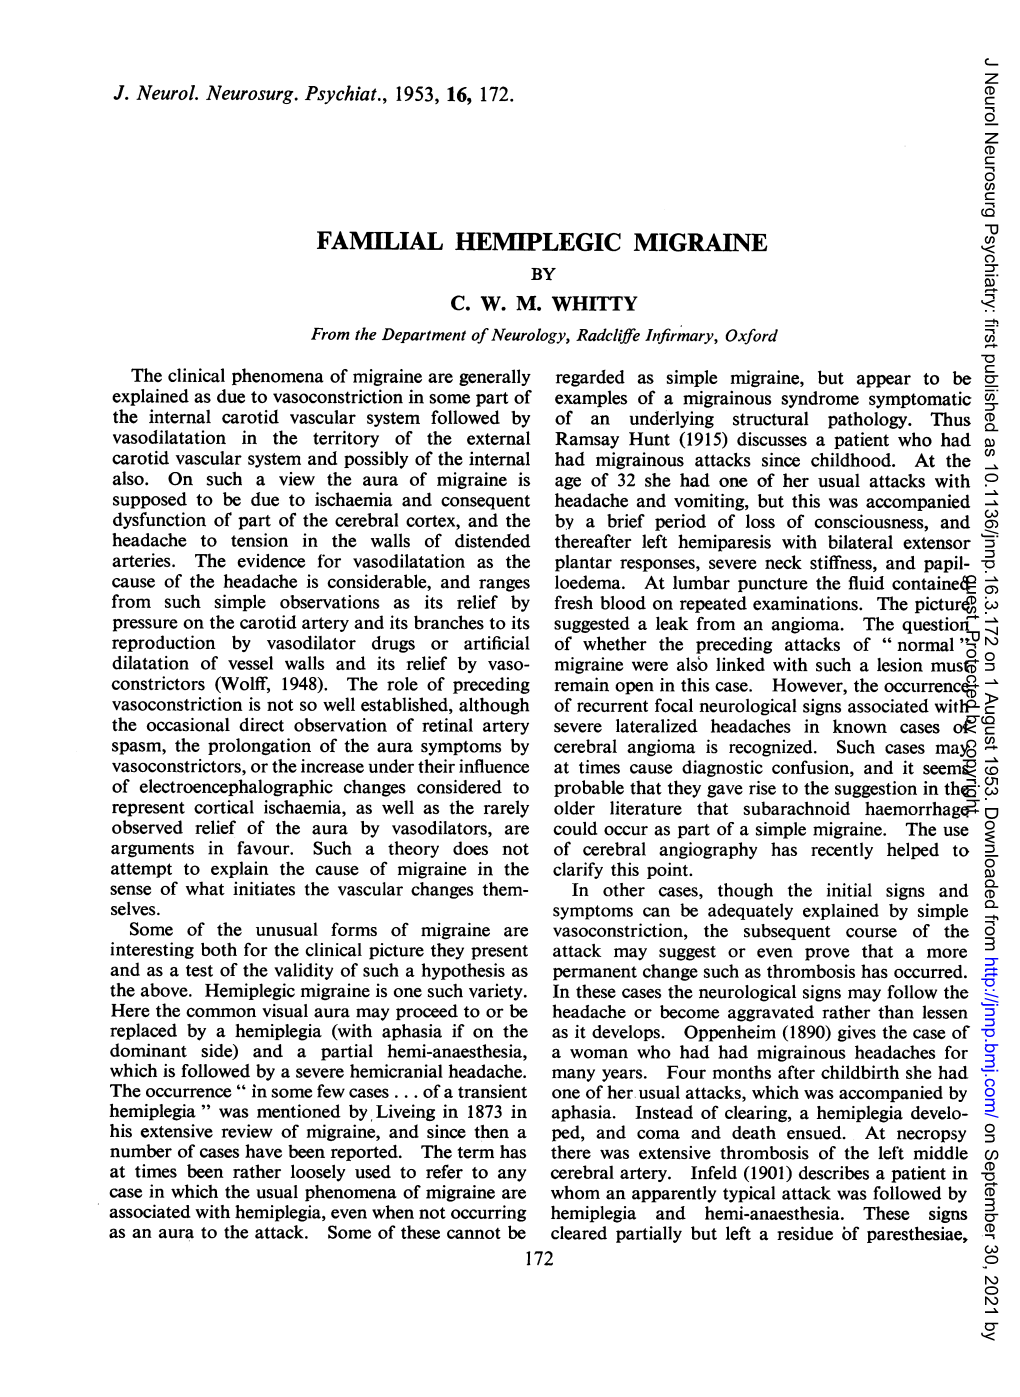 Familial Hemiplegic Migraine by C